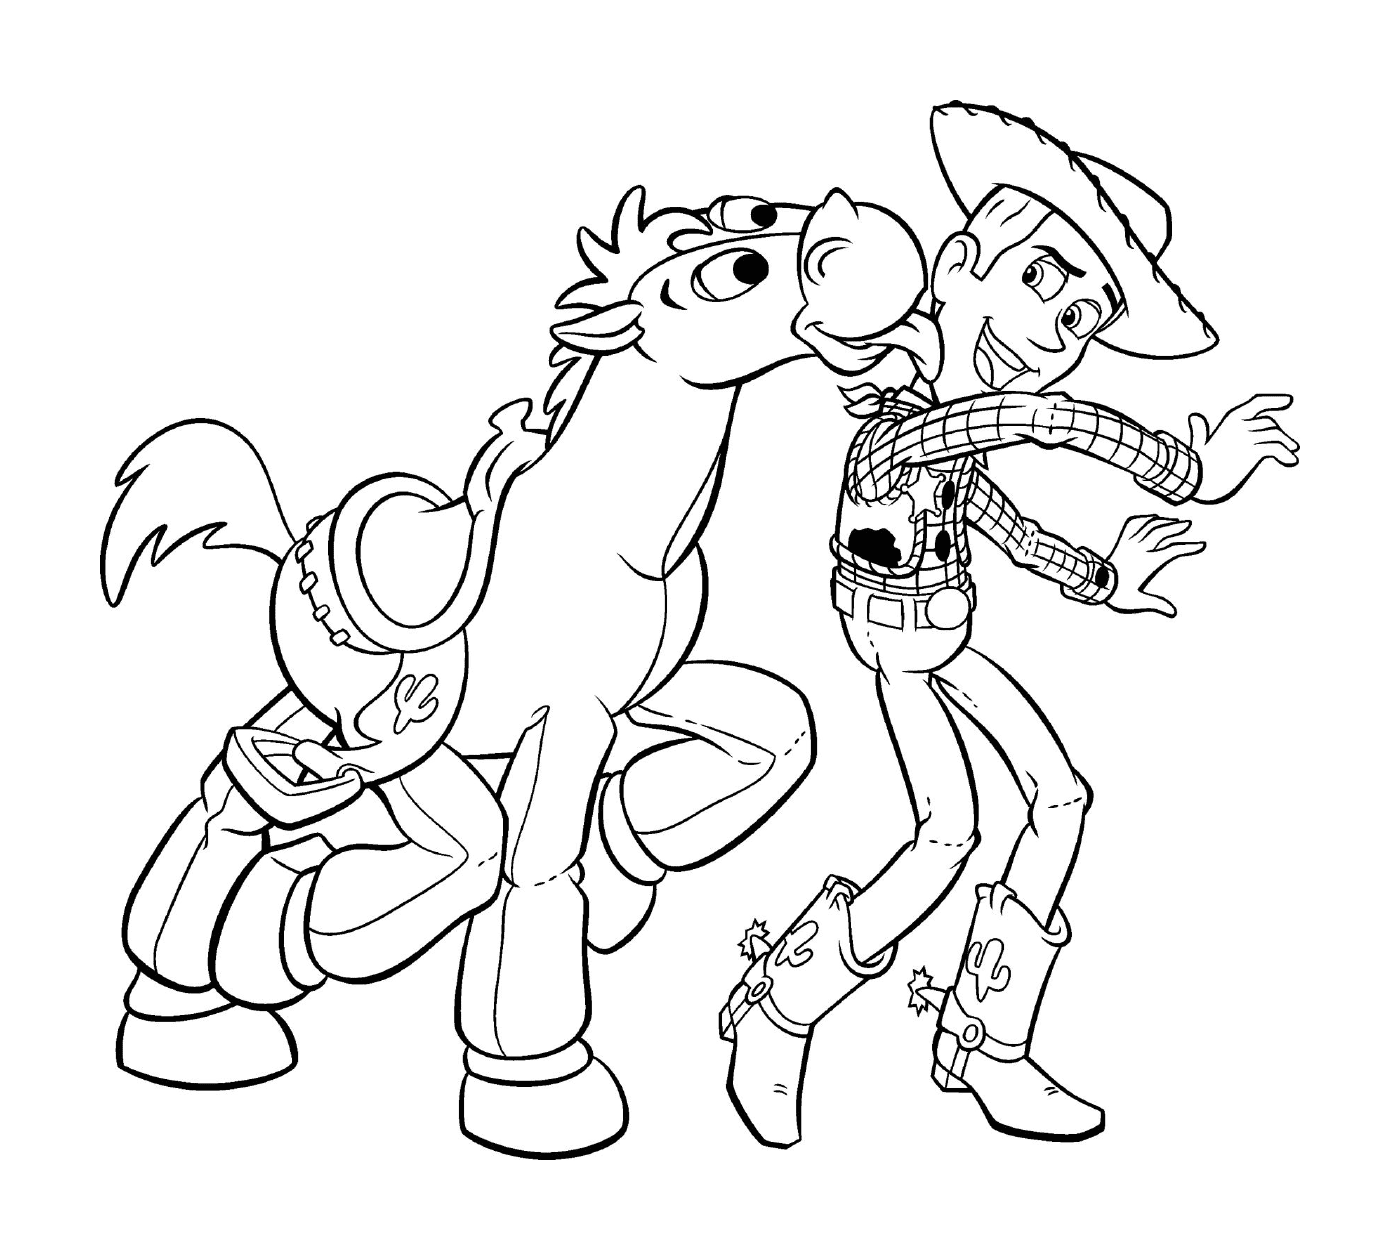  A cowboy and a horse 